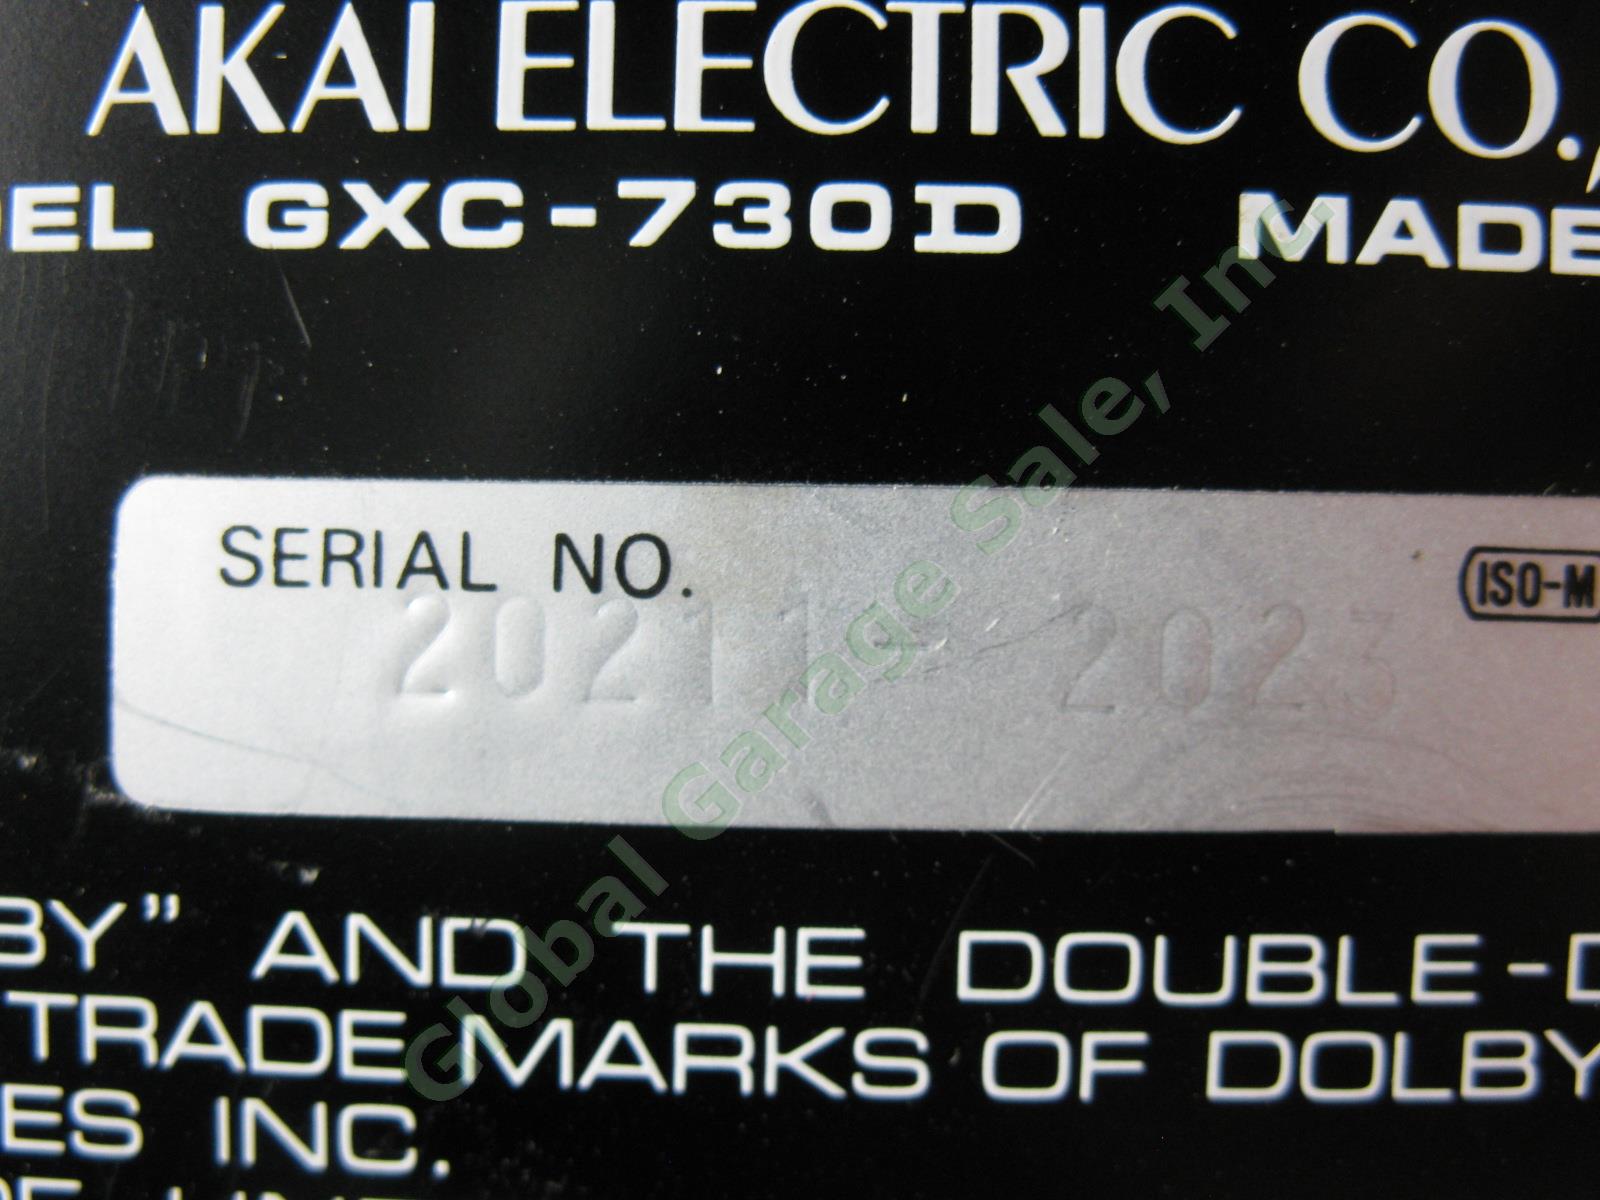 Akai GXC-730D Glass Ferrite Head Auto Reverse Stereo Cassette Tape Player Deck 8